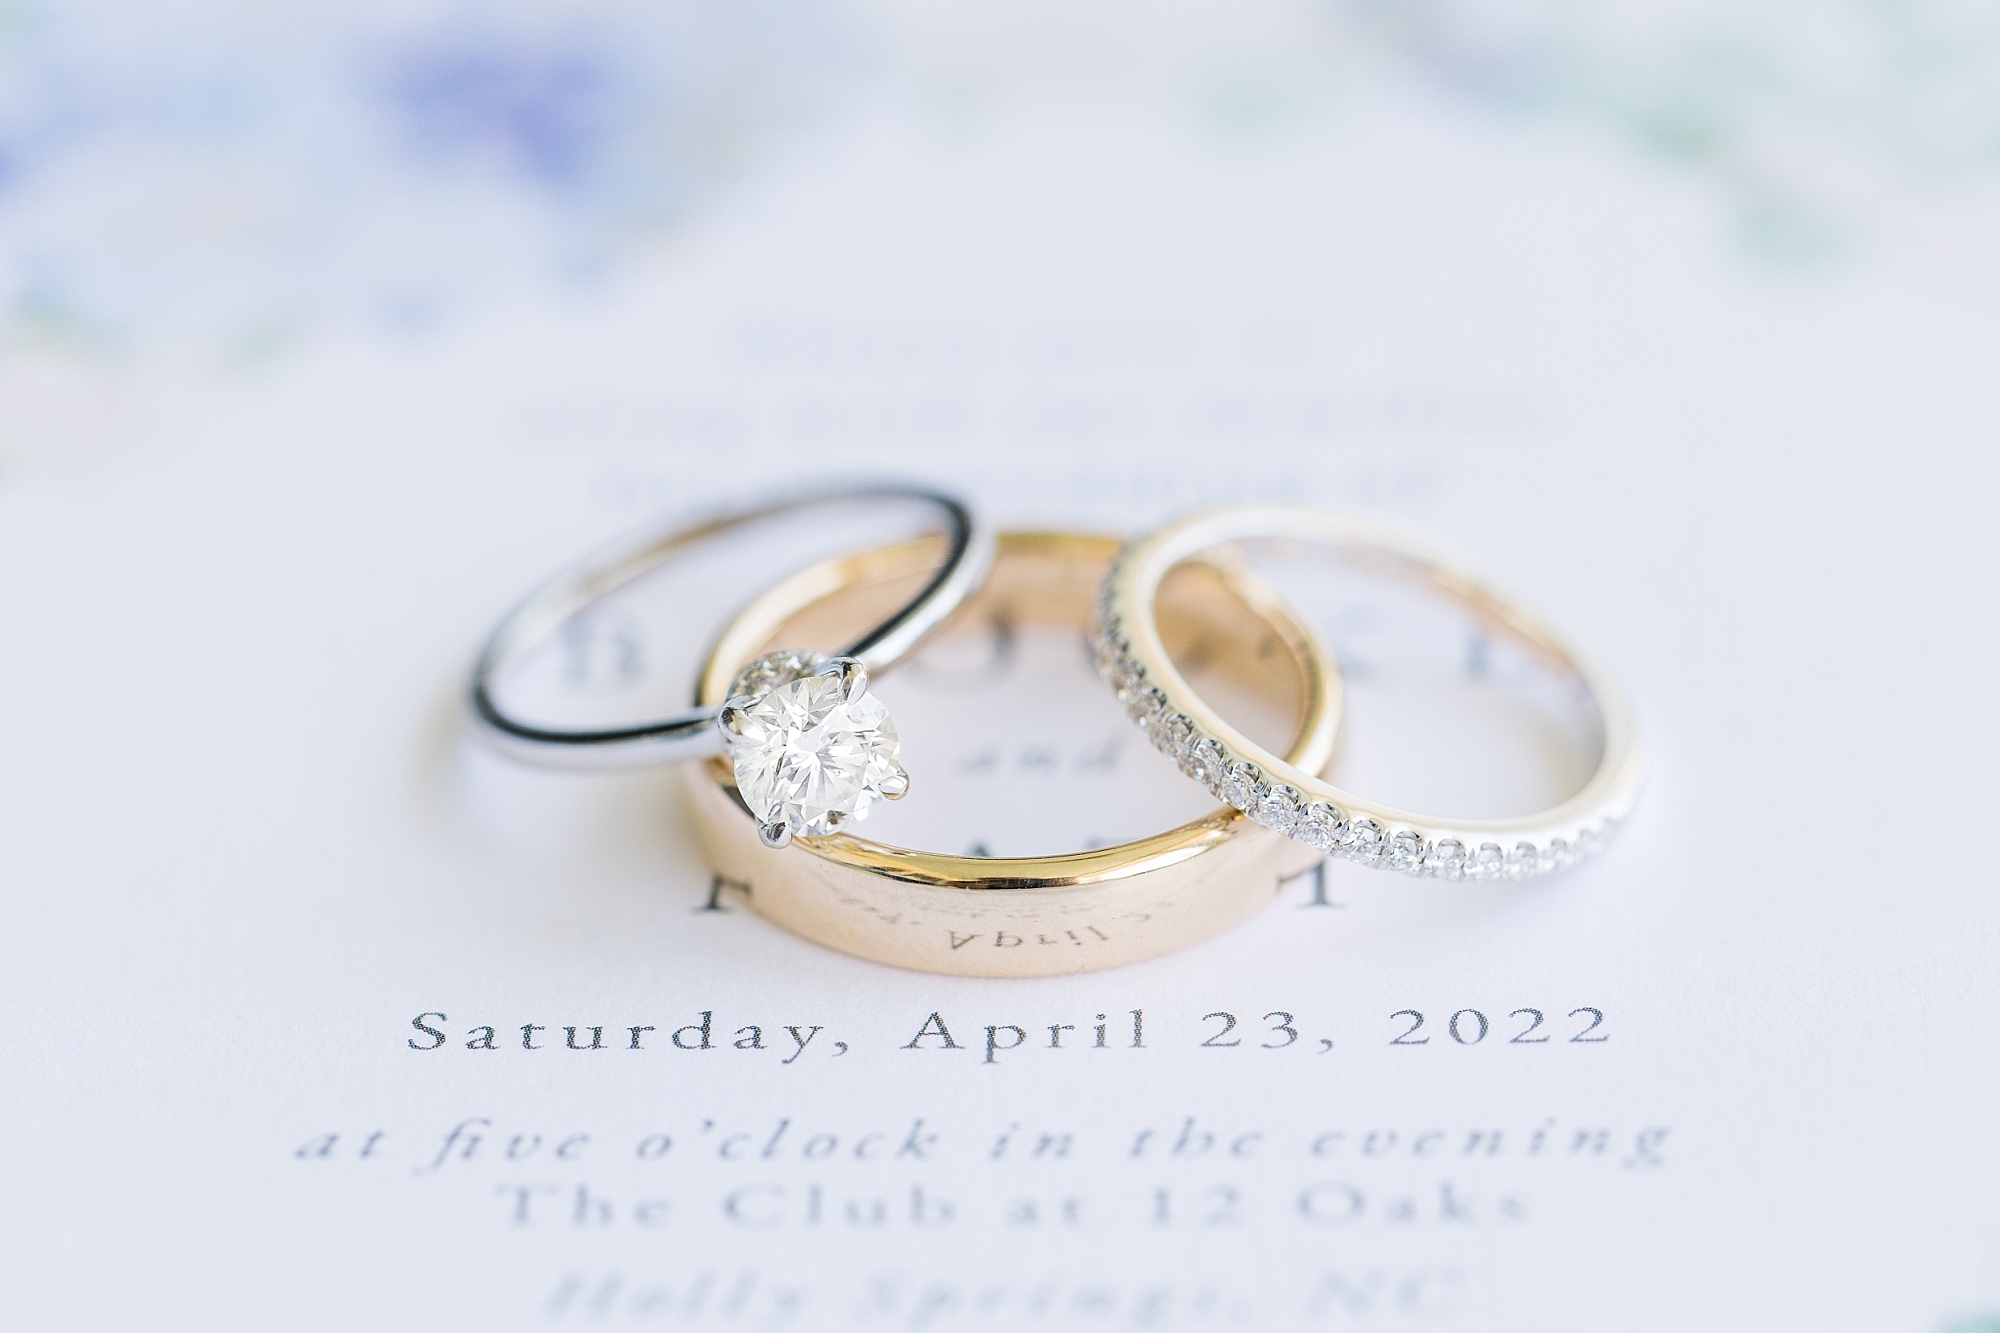 Wedding bands on invitation for spring wedding - Raleigh NC Wedding Photographer - Sarah Hinckley Photography